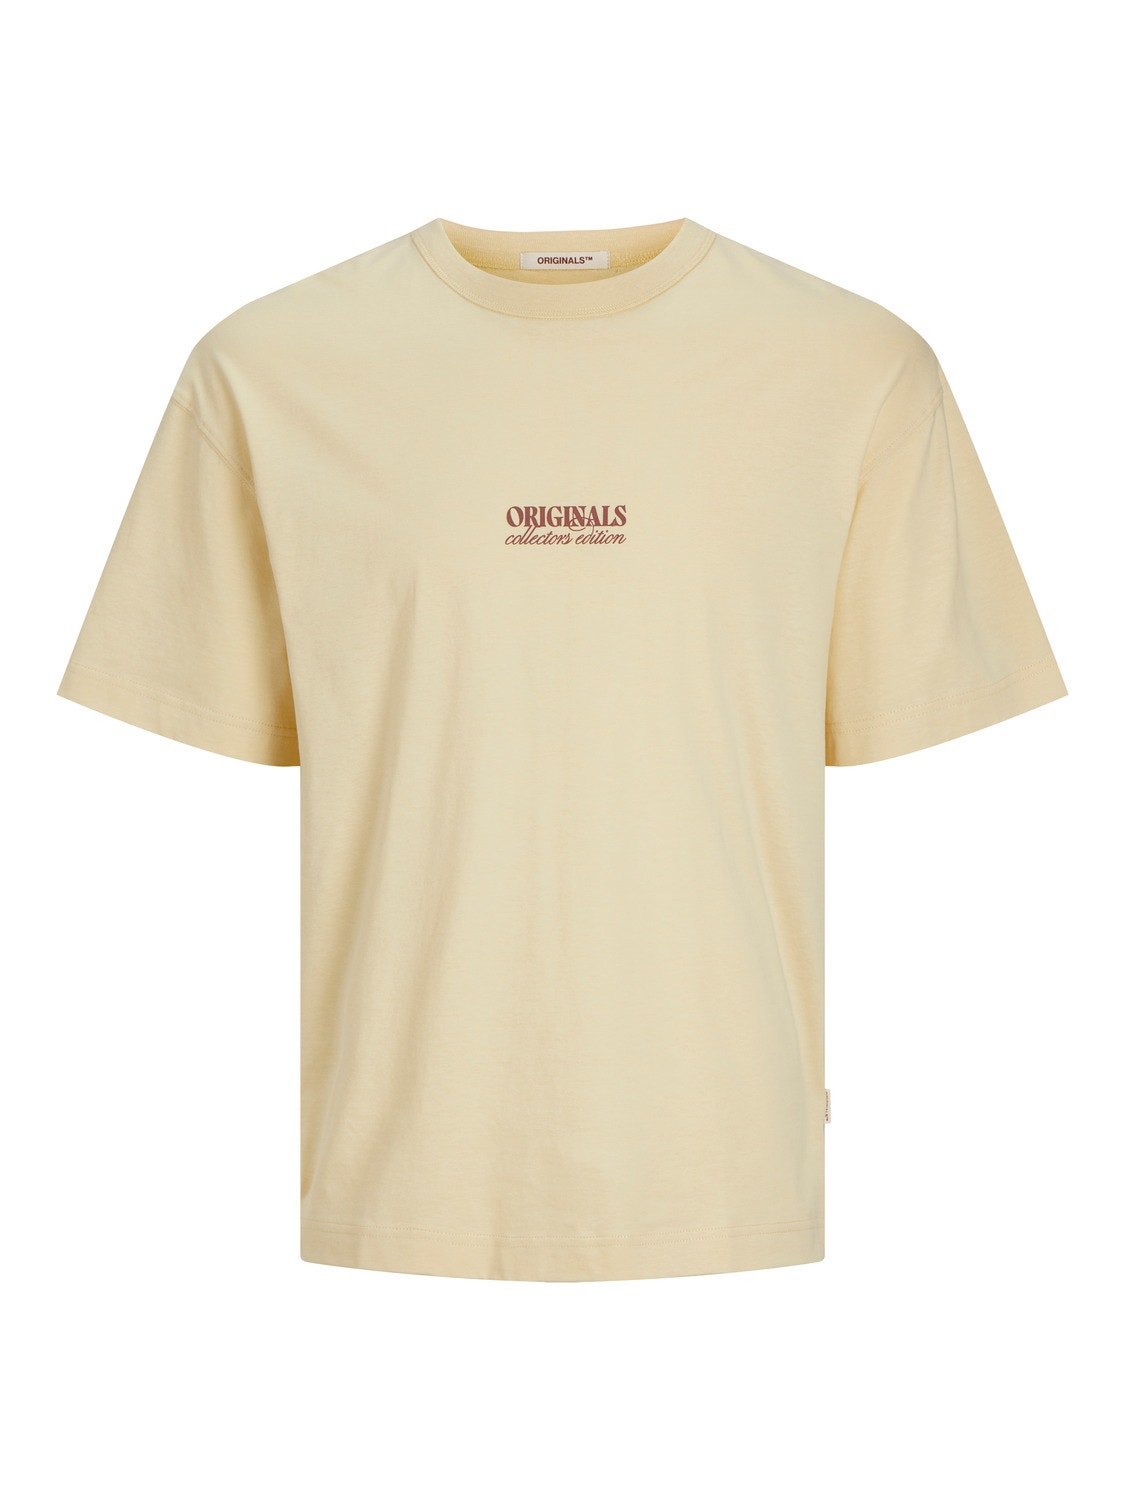 Jack & Jones T-shirt Estampar Decote Redondo -Italian Straw - 12256258